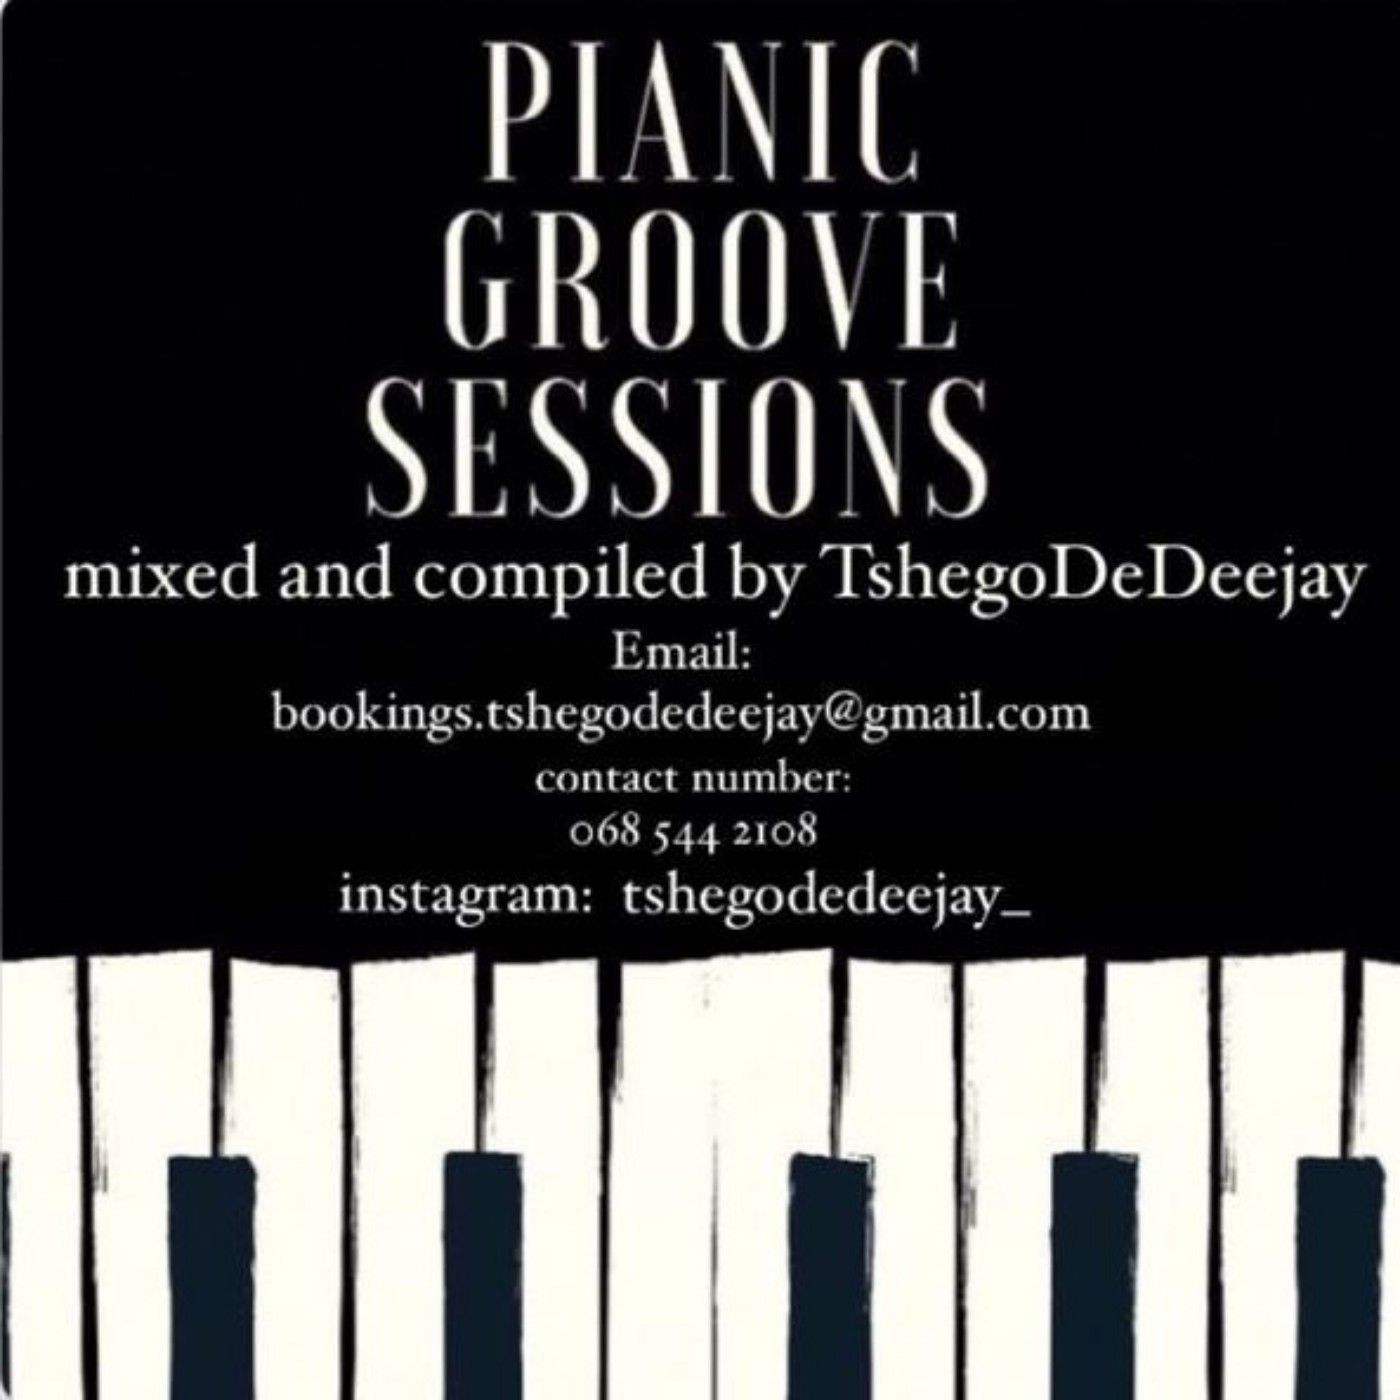 Pianic Groove Sessions